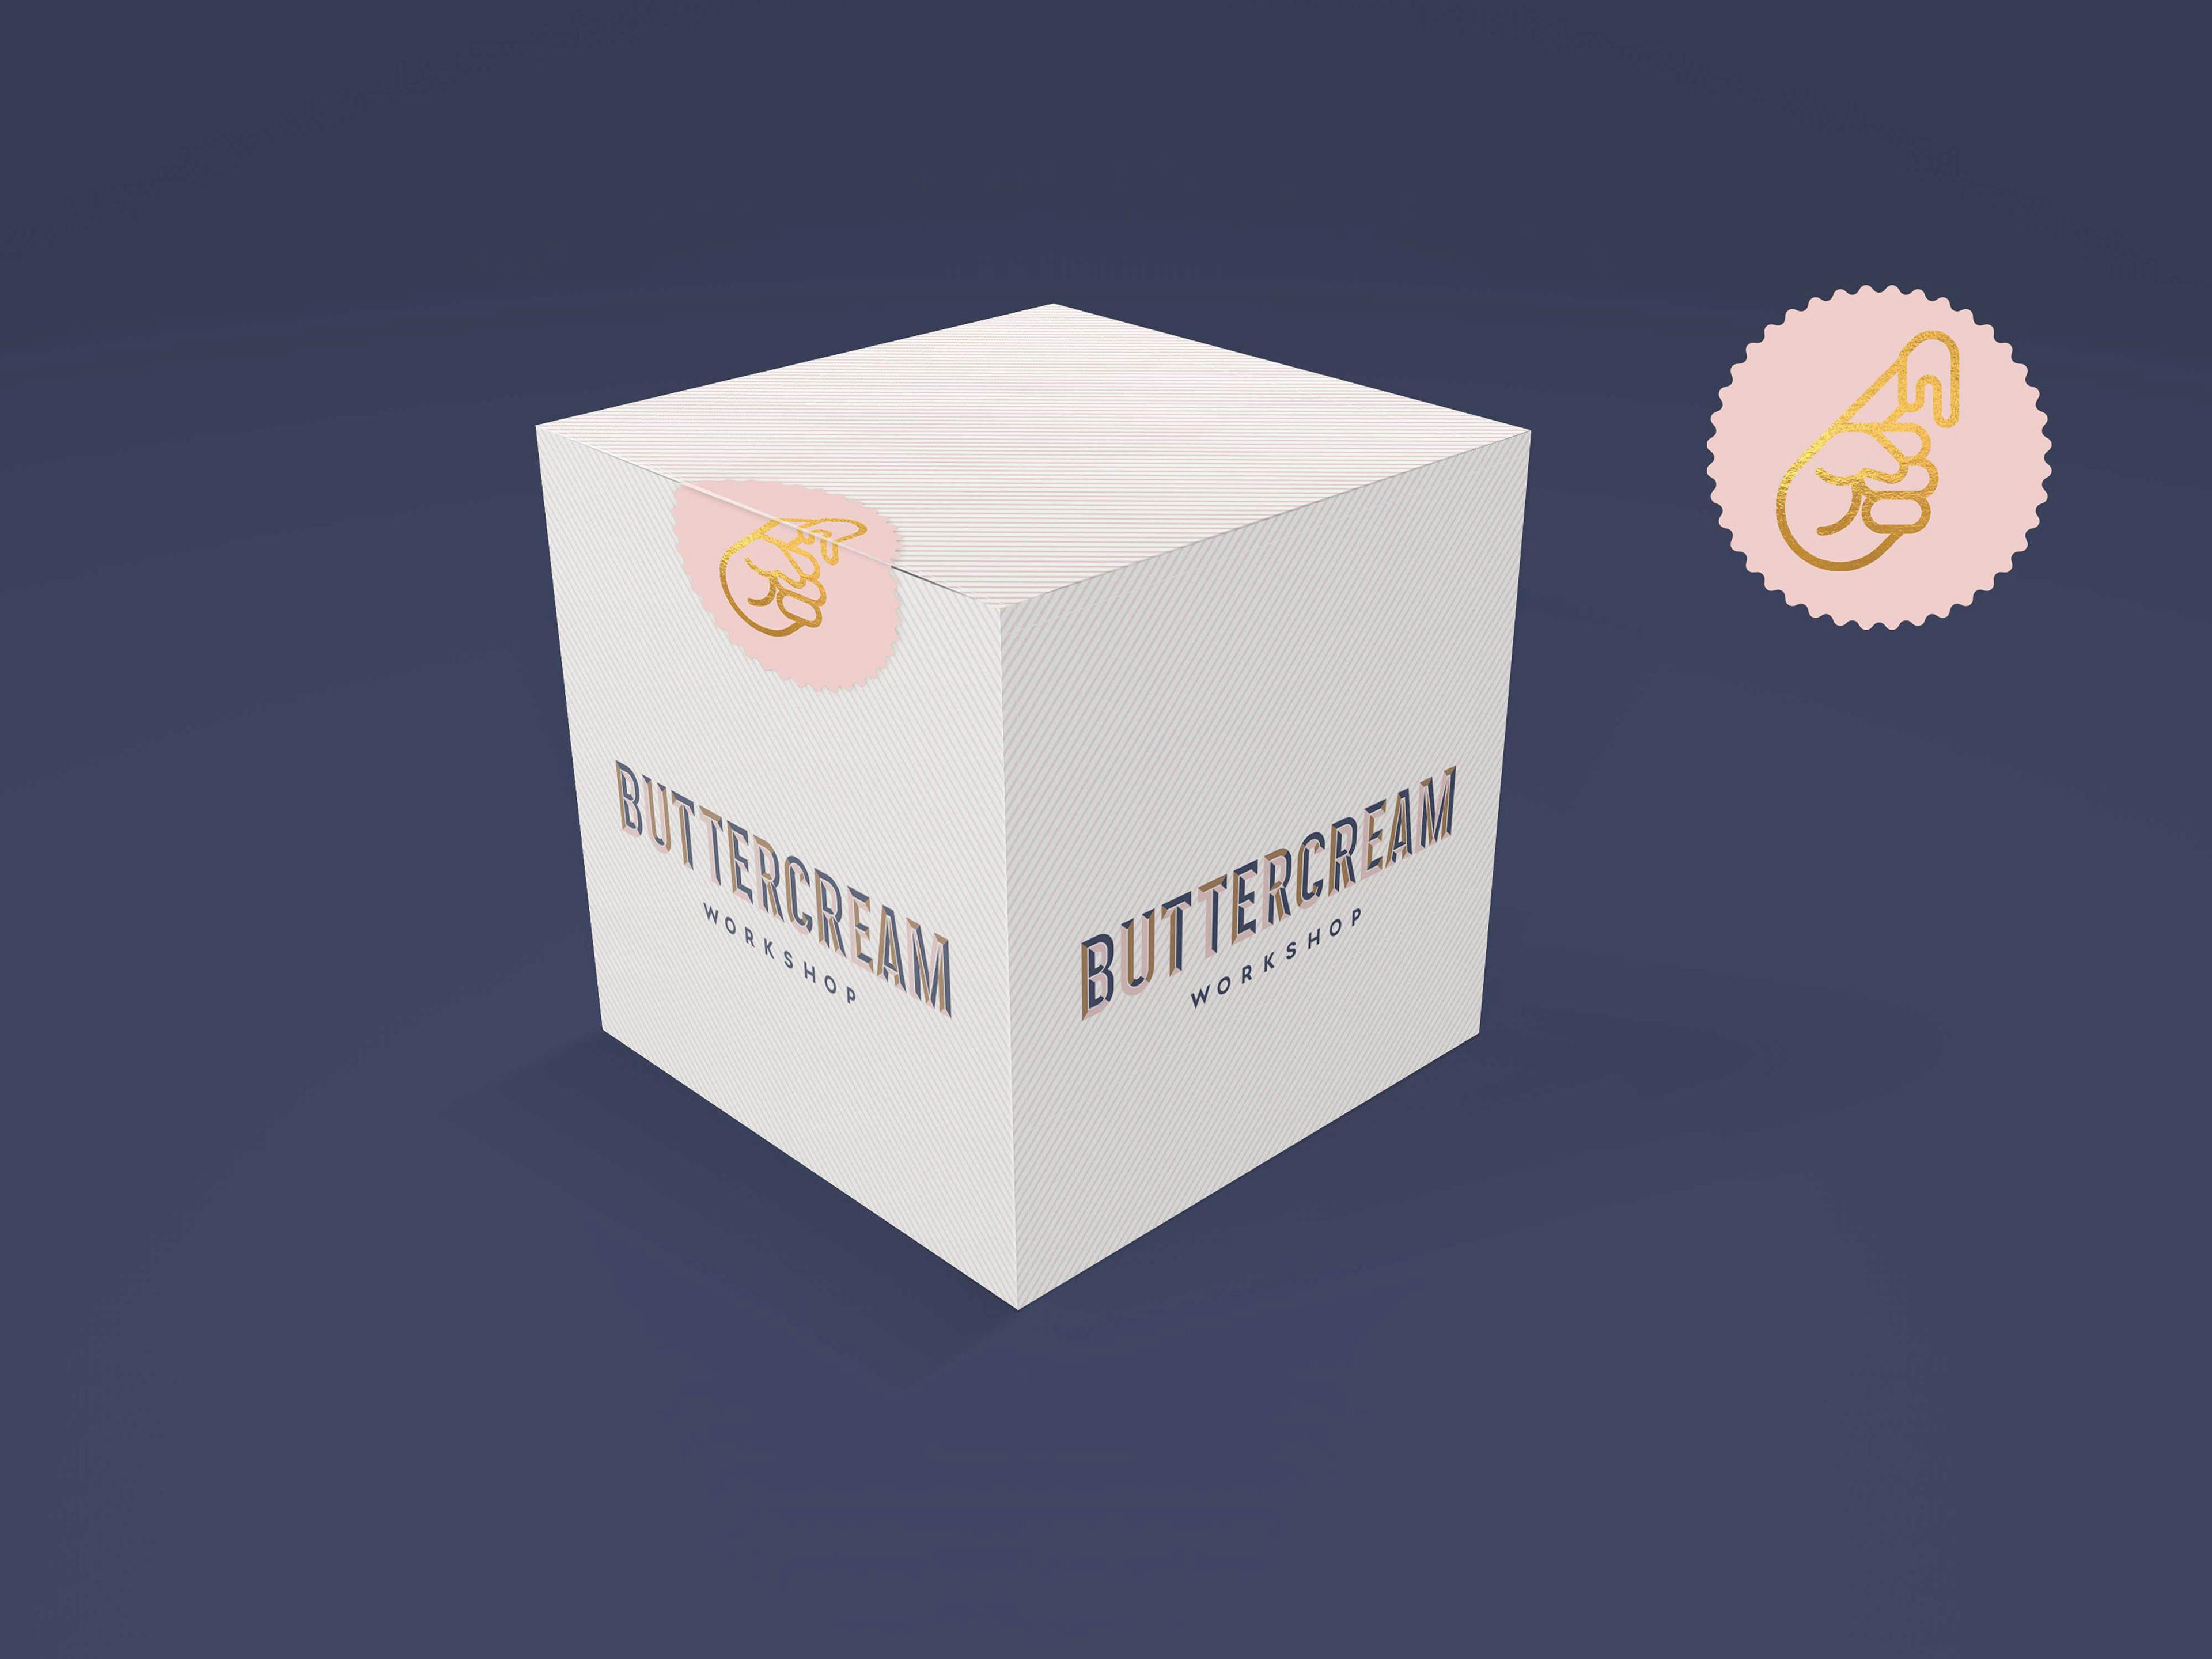 Buttercream Workshop Cake Box Design